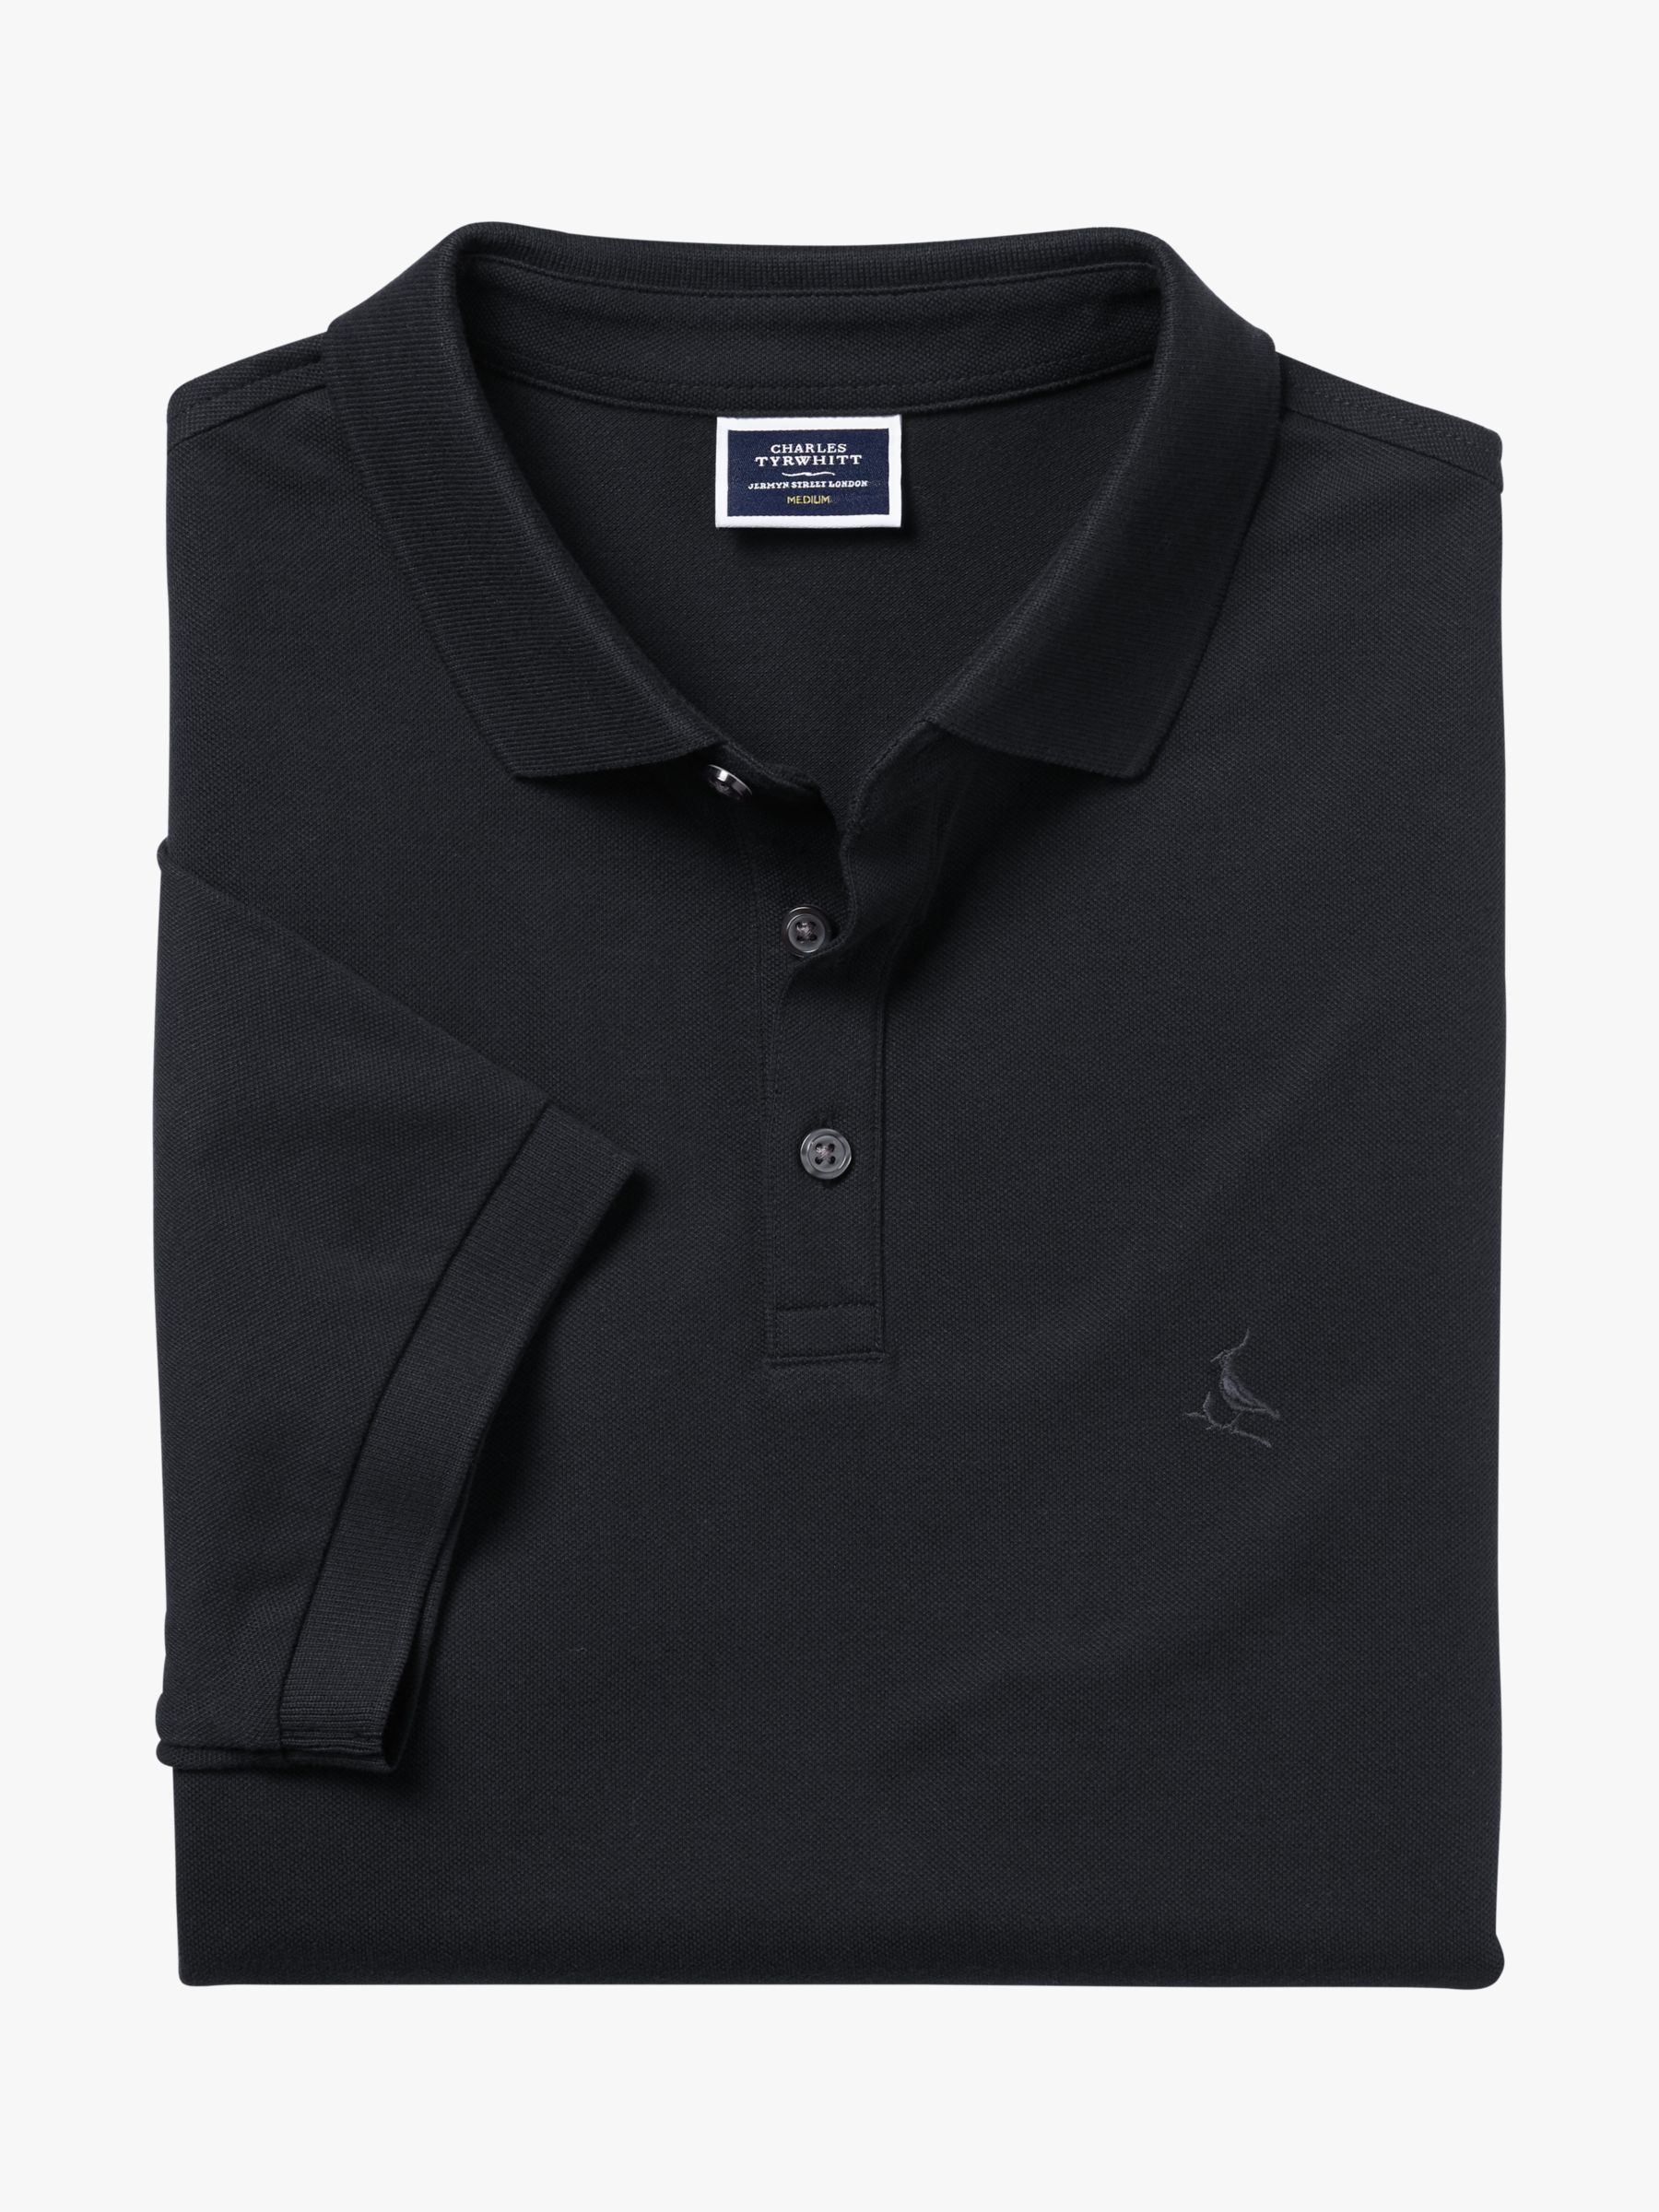 Charles Tyrwhitt Pique Polo Shirt, Black, S